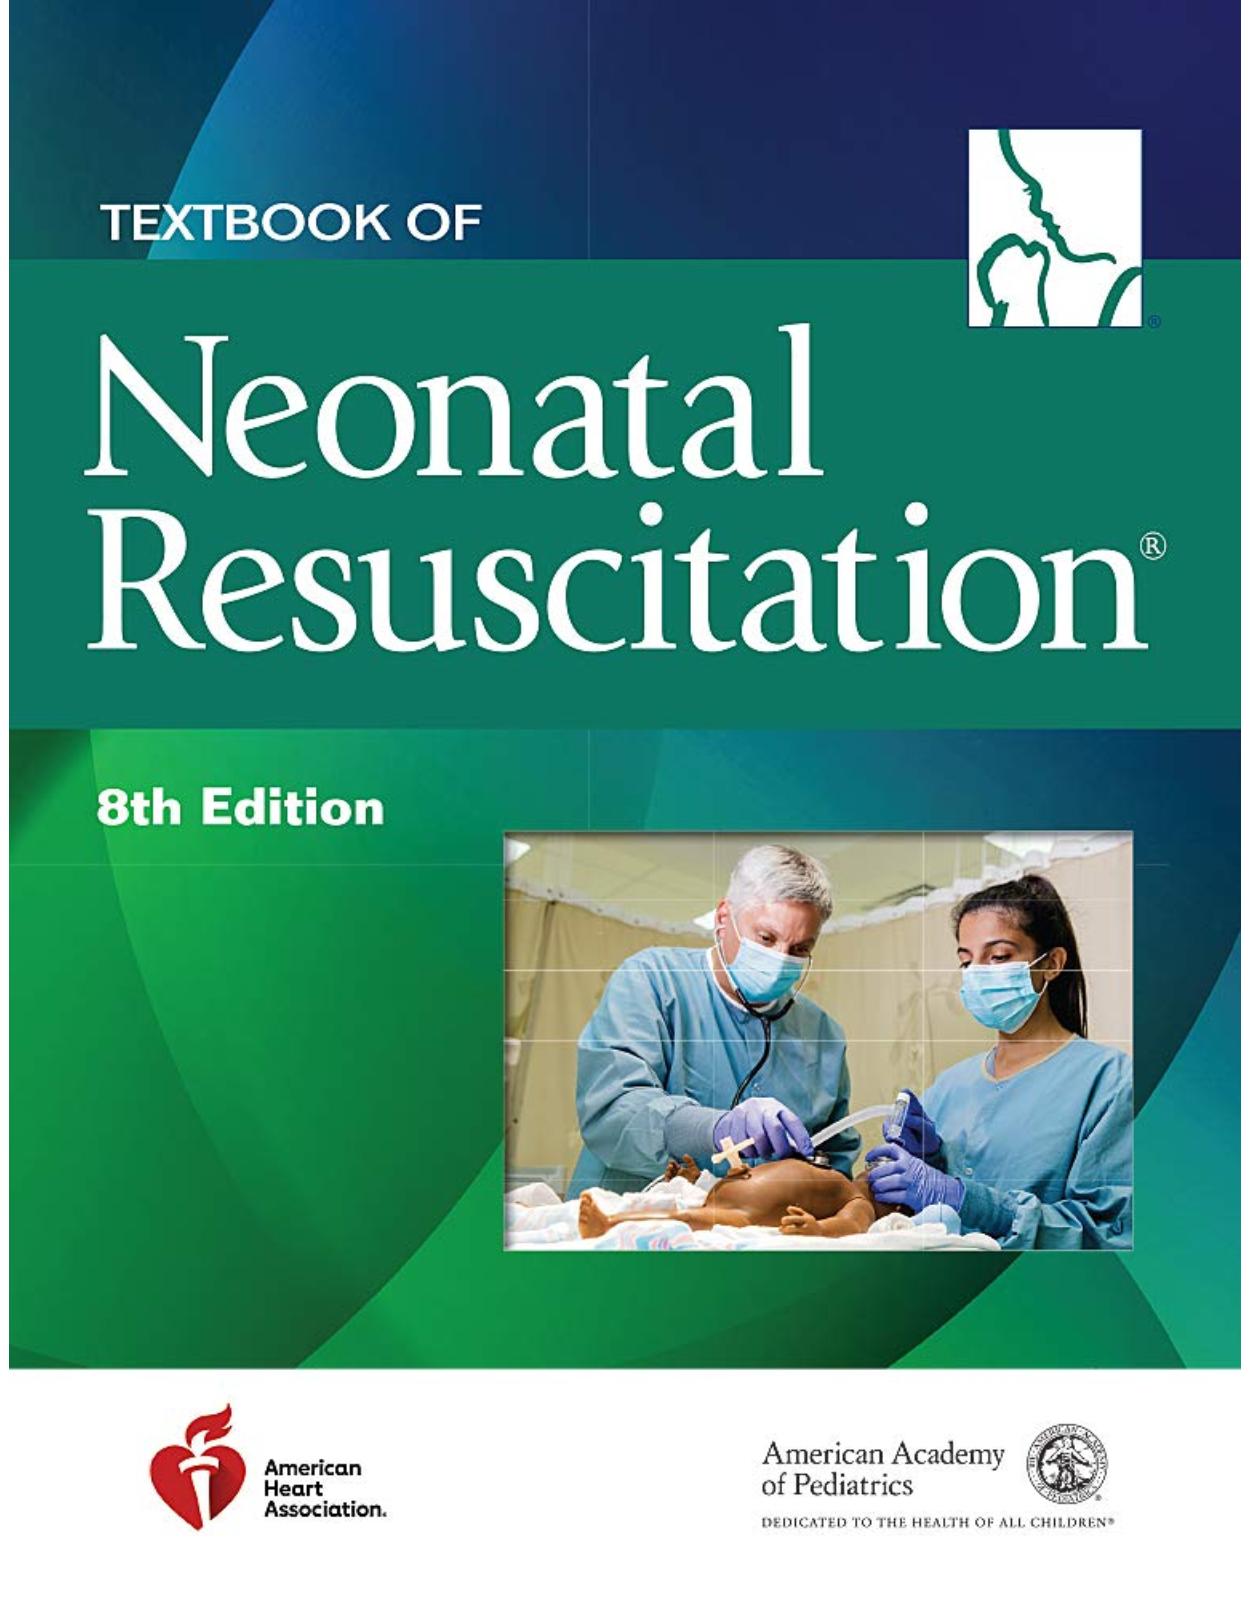 Textbook of Neonatal Resuscitation 